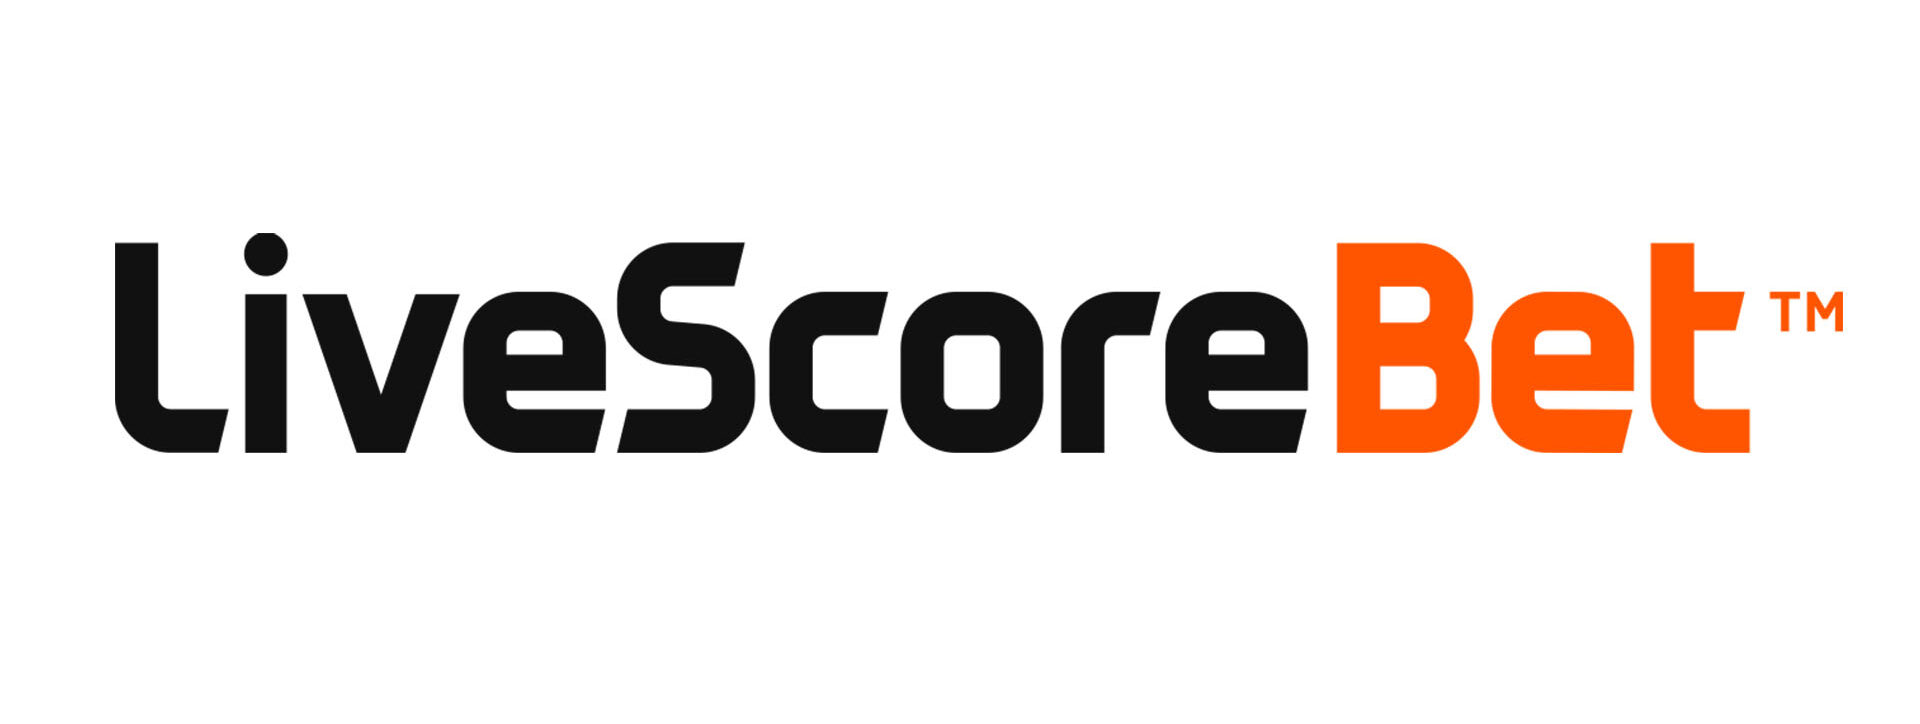 Livescore Bet logo